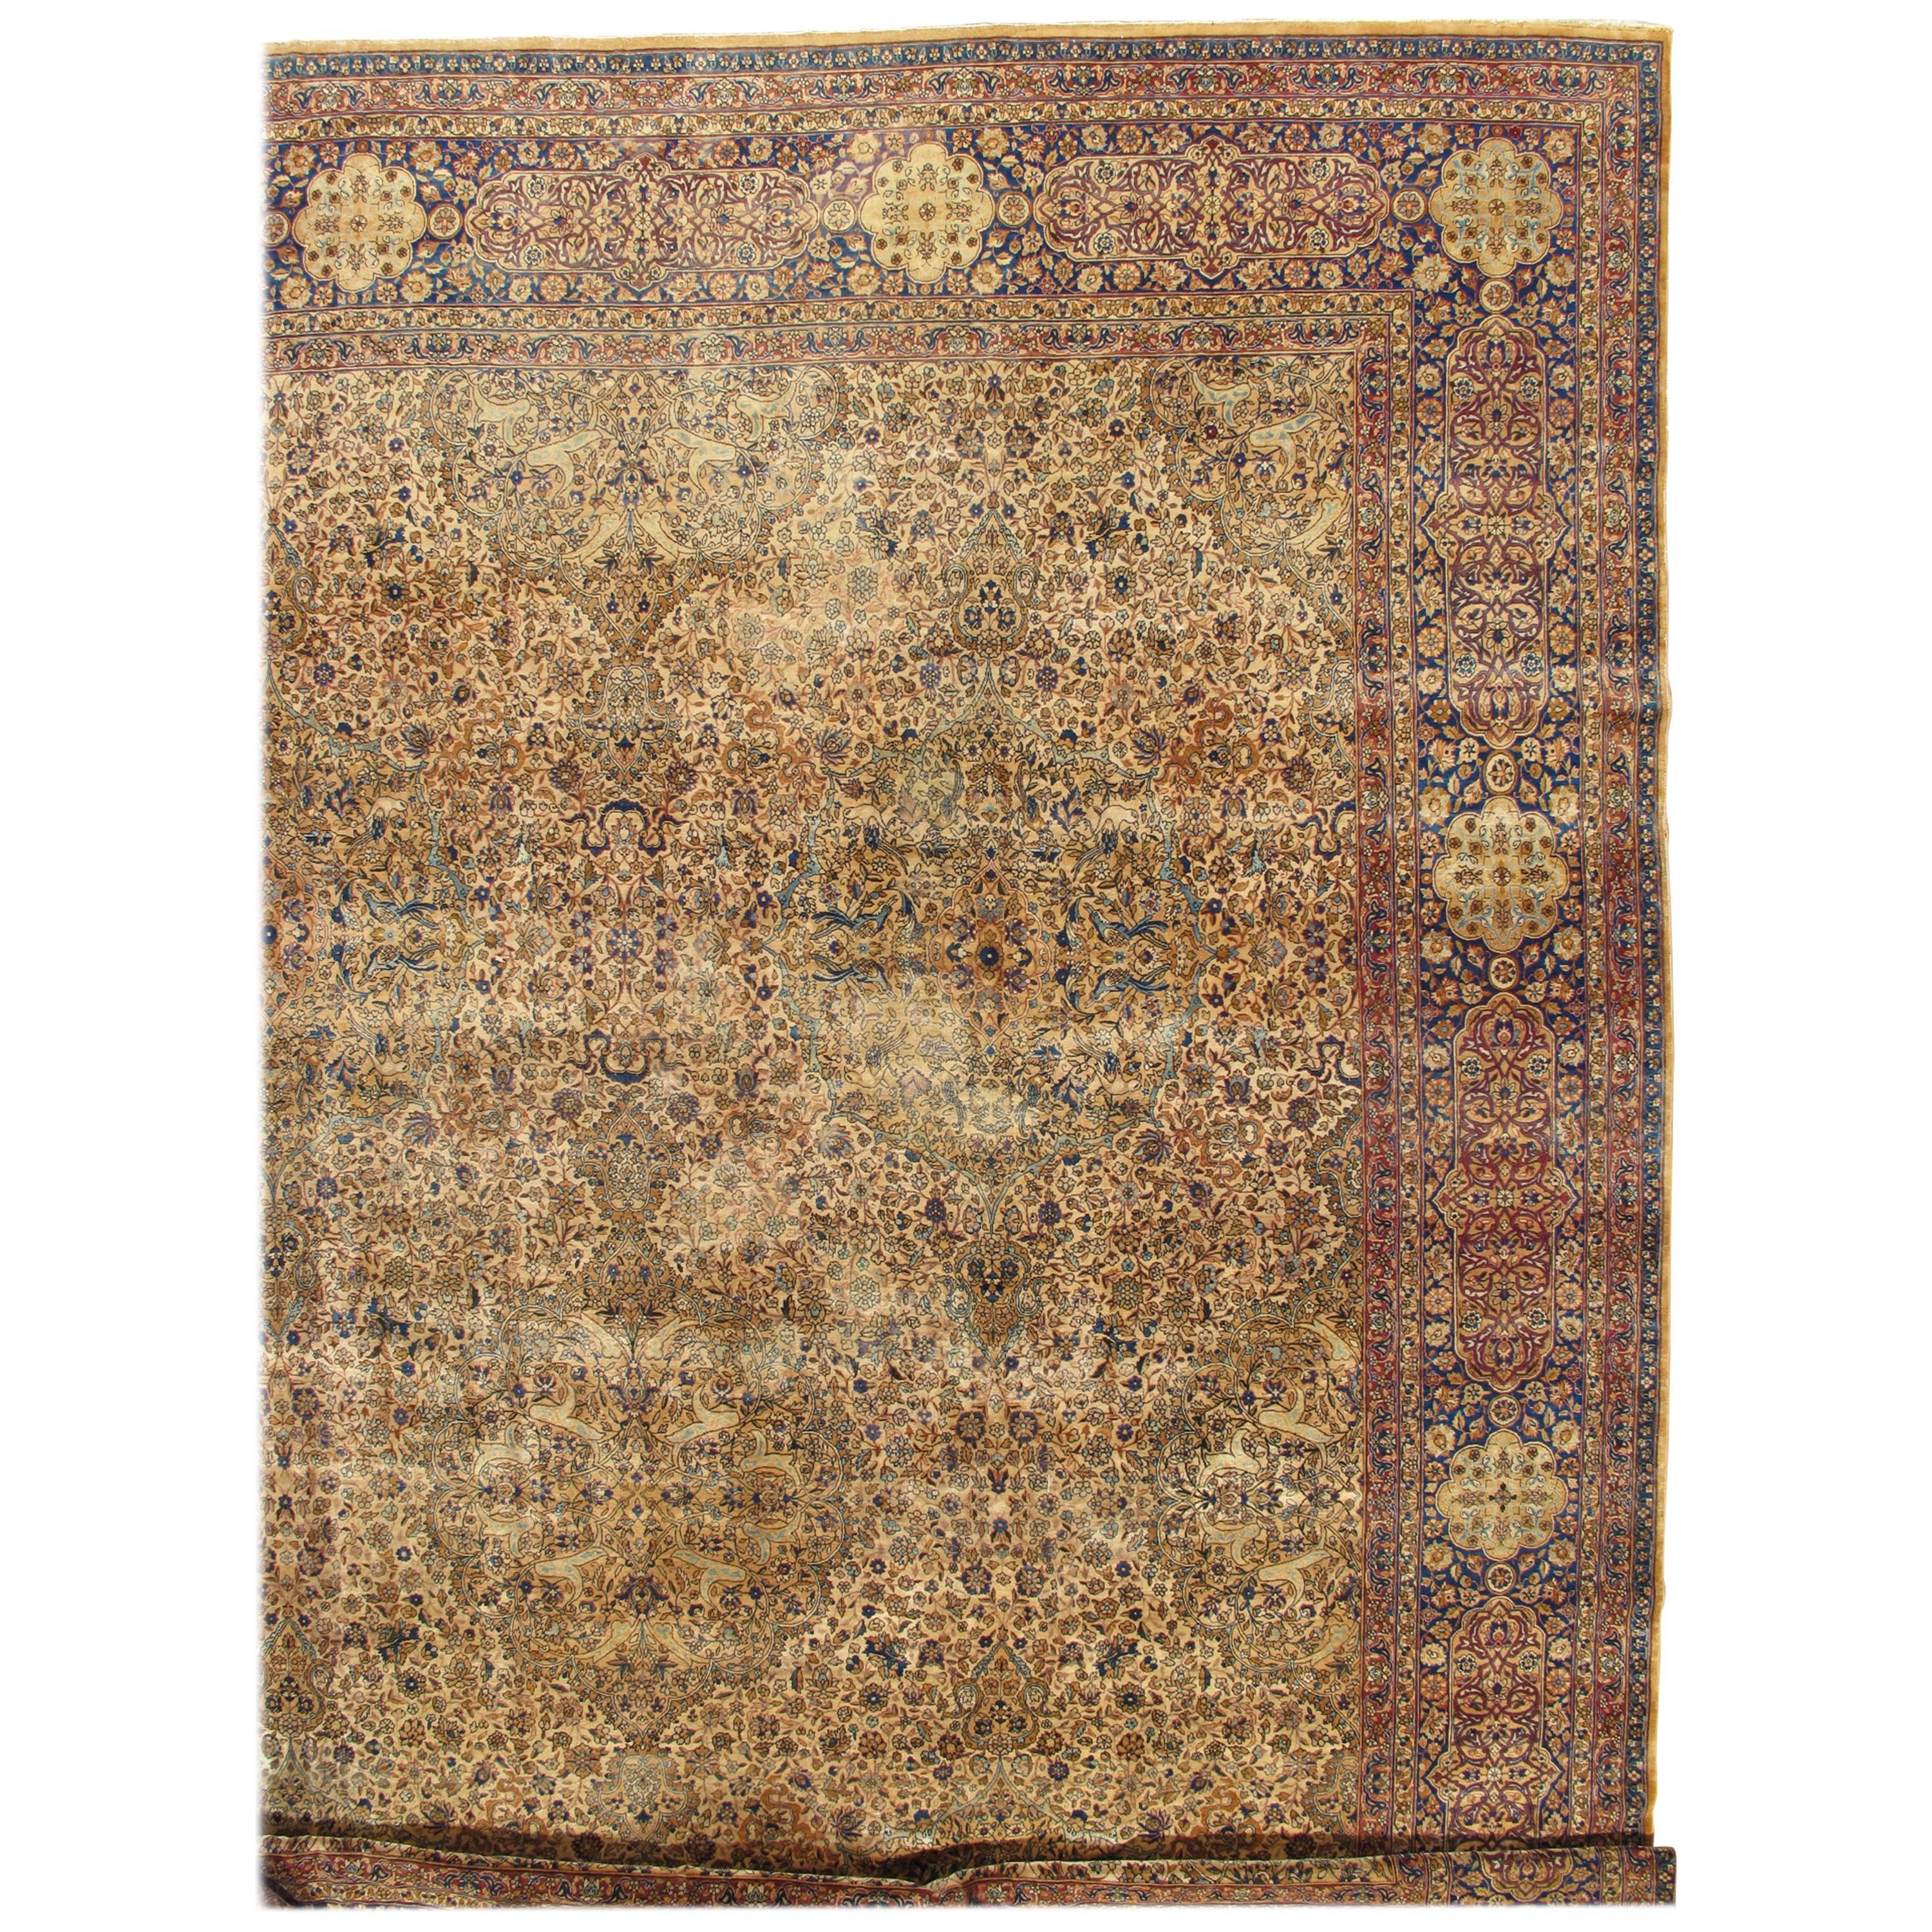 Antique Persian Kerman Carpet, Oriental Rug, Handmade, Ivory, Gold, Blue, Soft For Sale